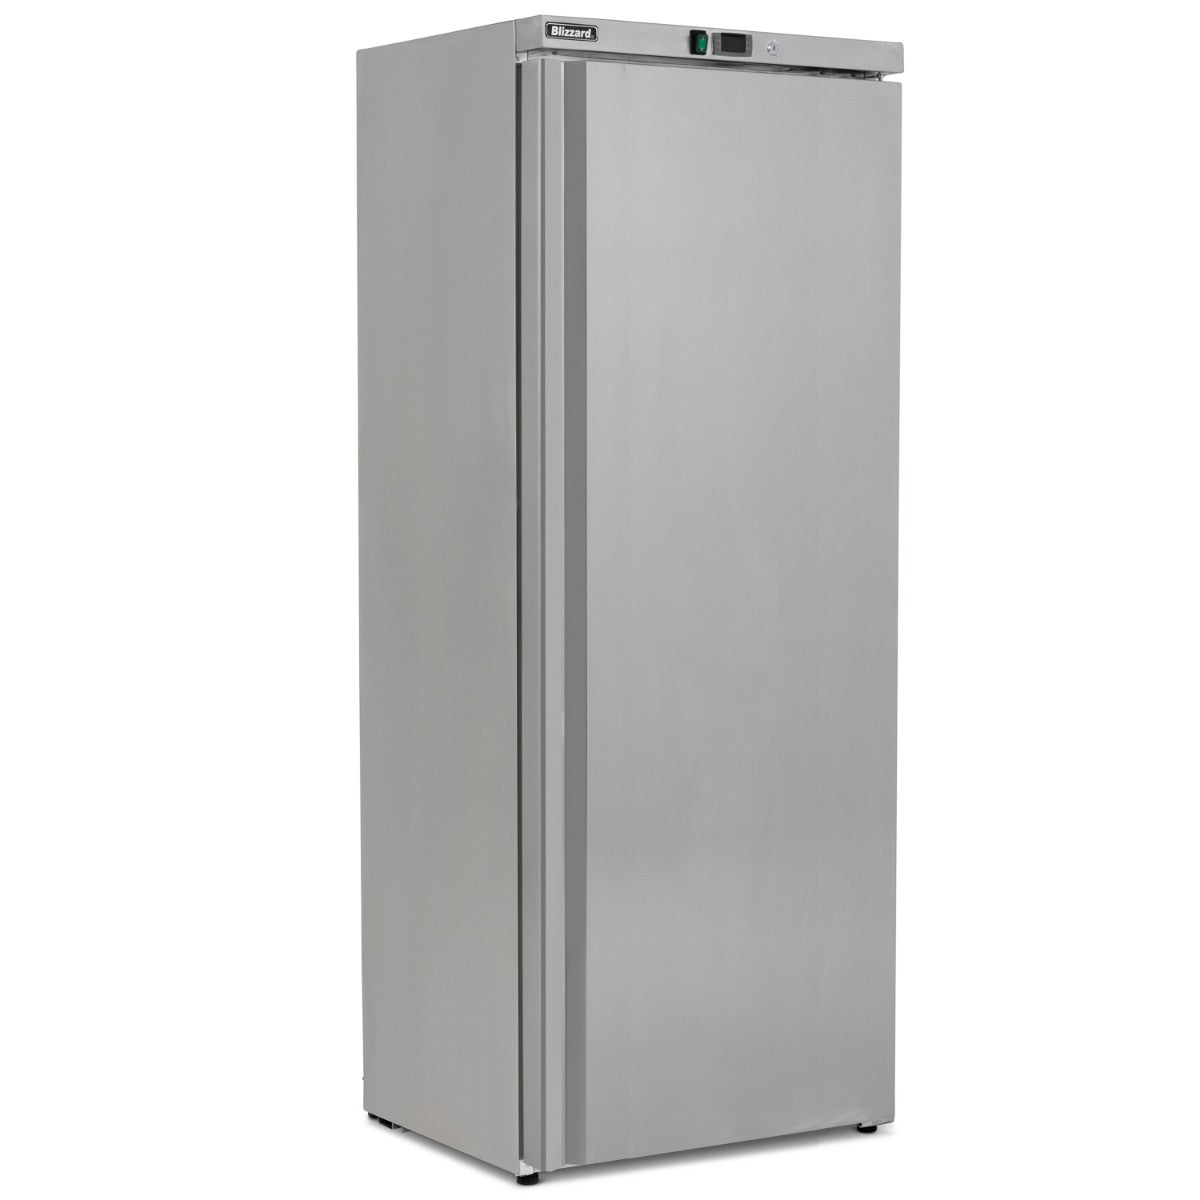 Blizzard Single Door Stainless Steel Refrigerator